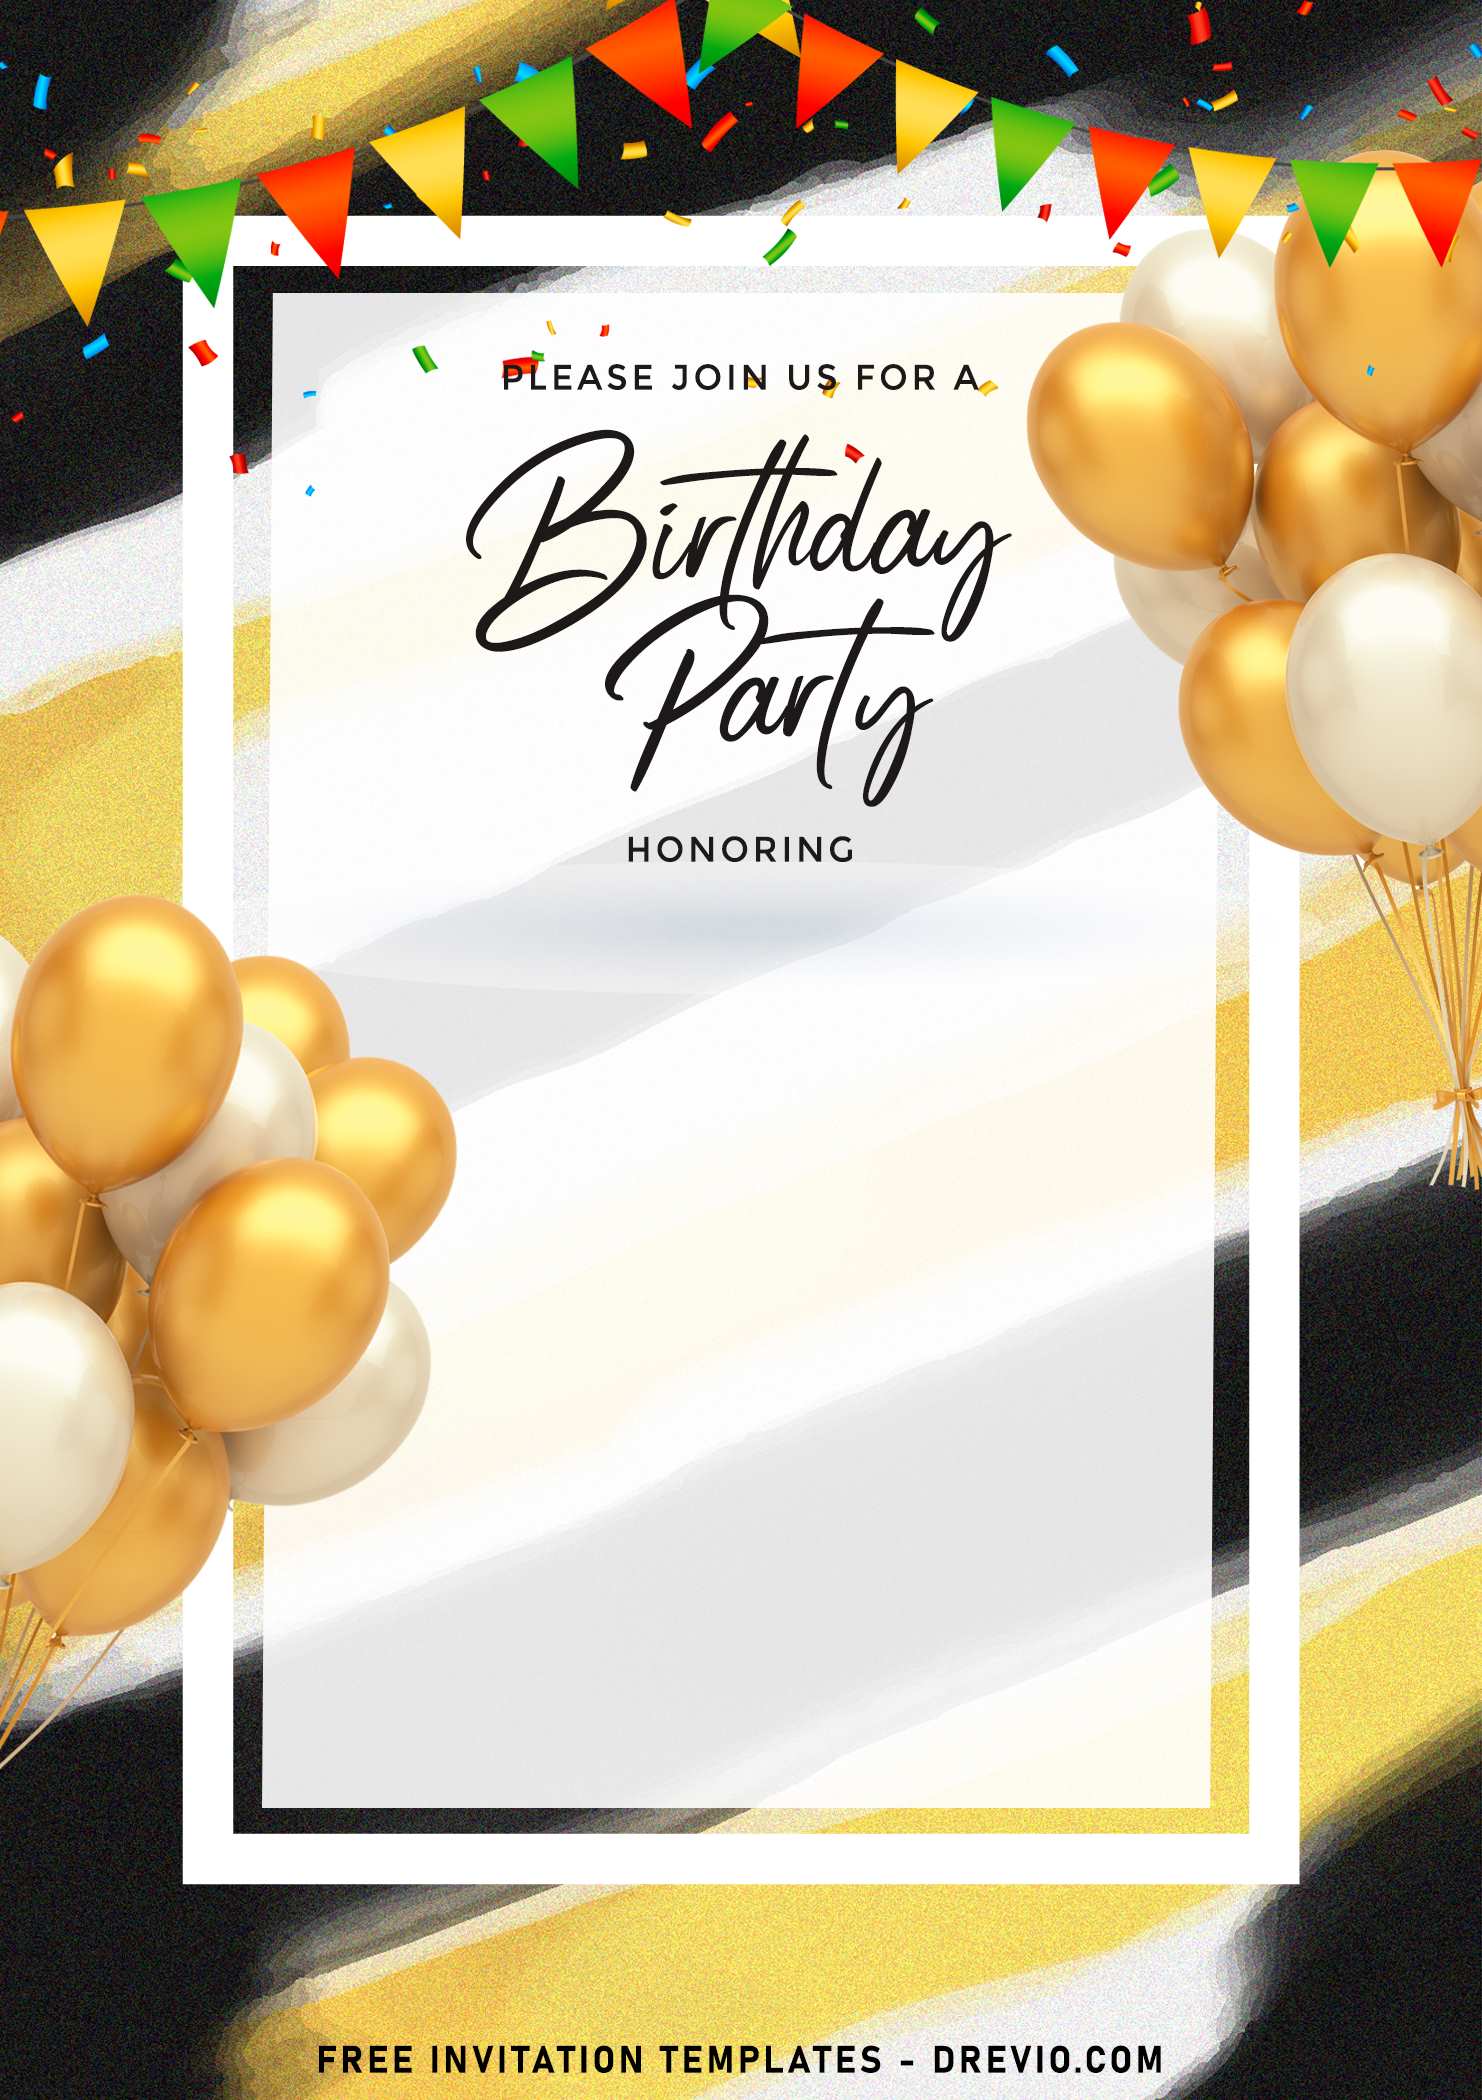 Birthday Invitation E-Card Maker 11